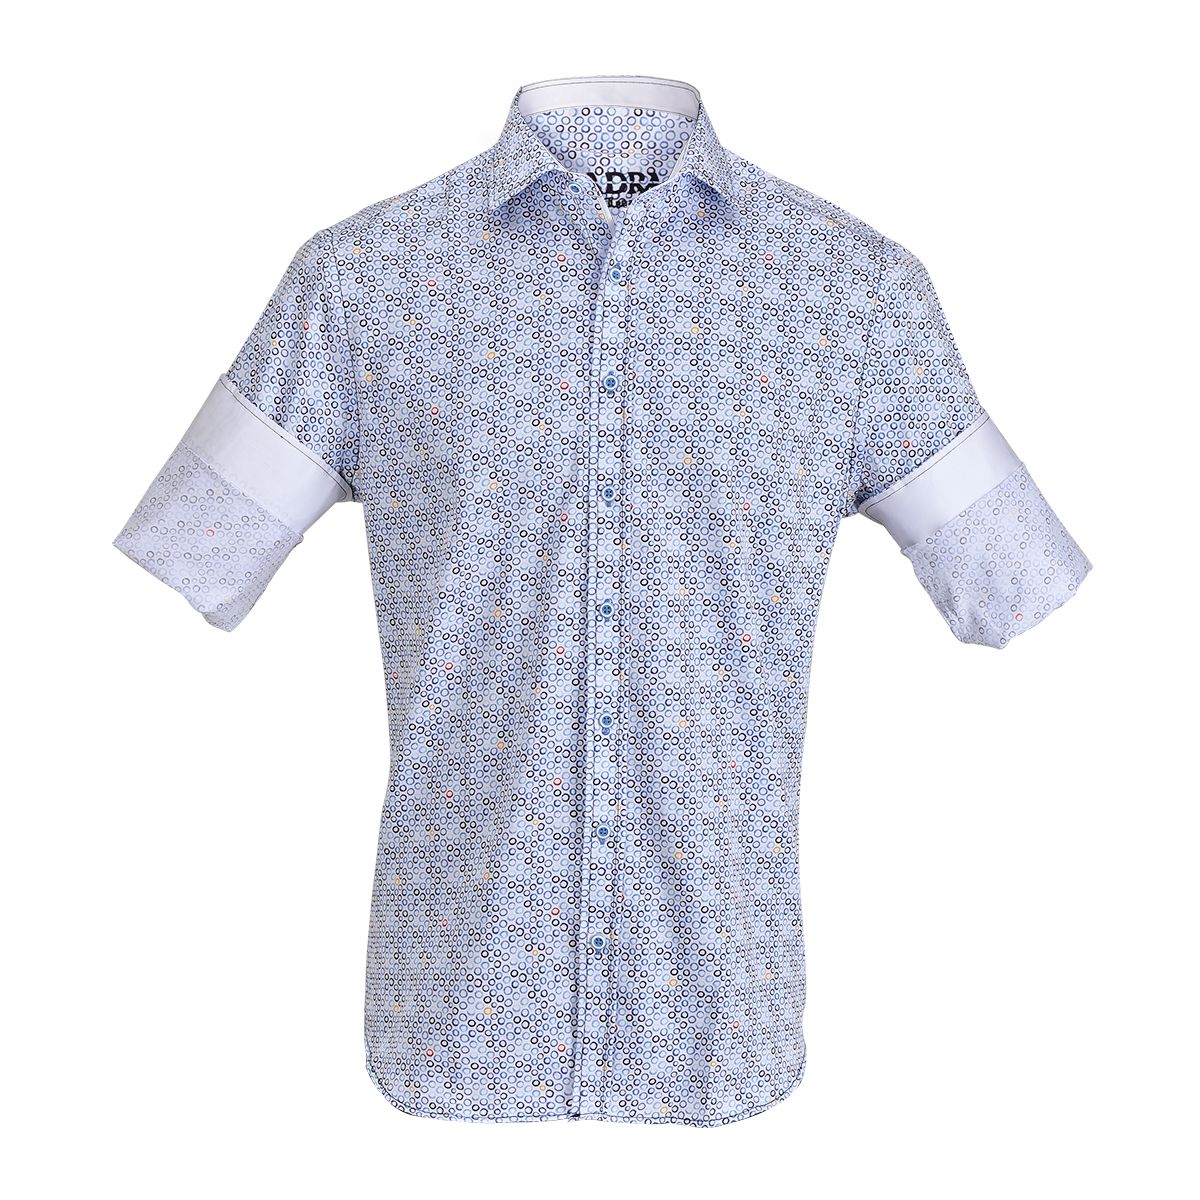 CM0W465 - Cuadra ocean casual fashion circle abstract shirt for men-CUADRA-Kuet-Cuadra-Boots